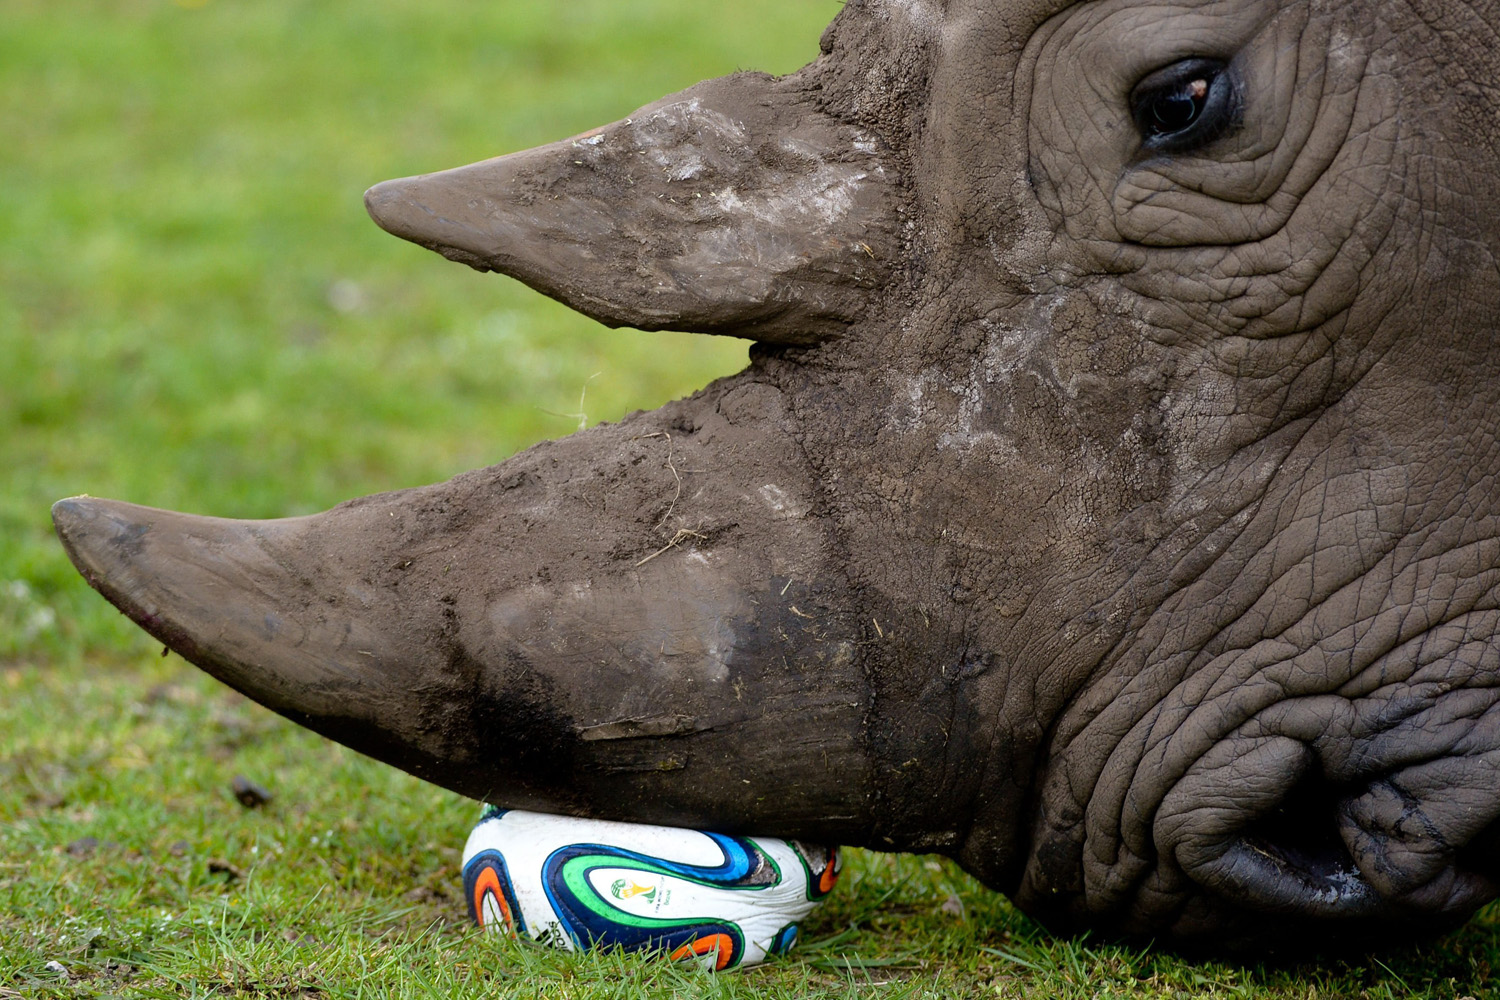 Rhinoceros play with a football